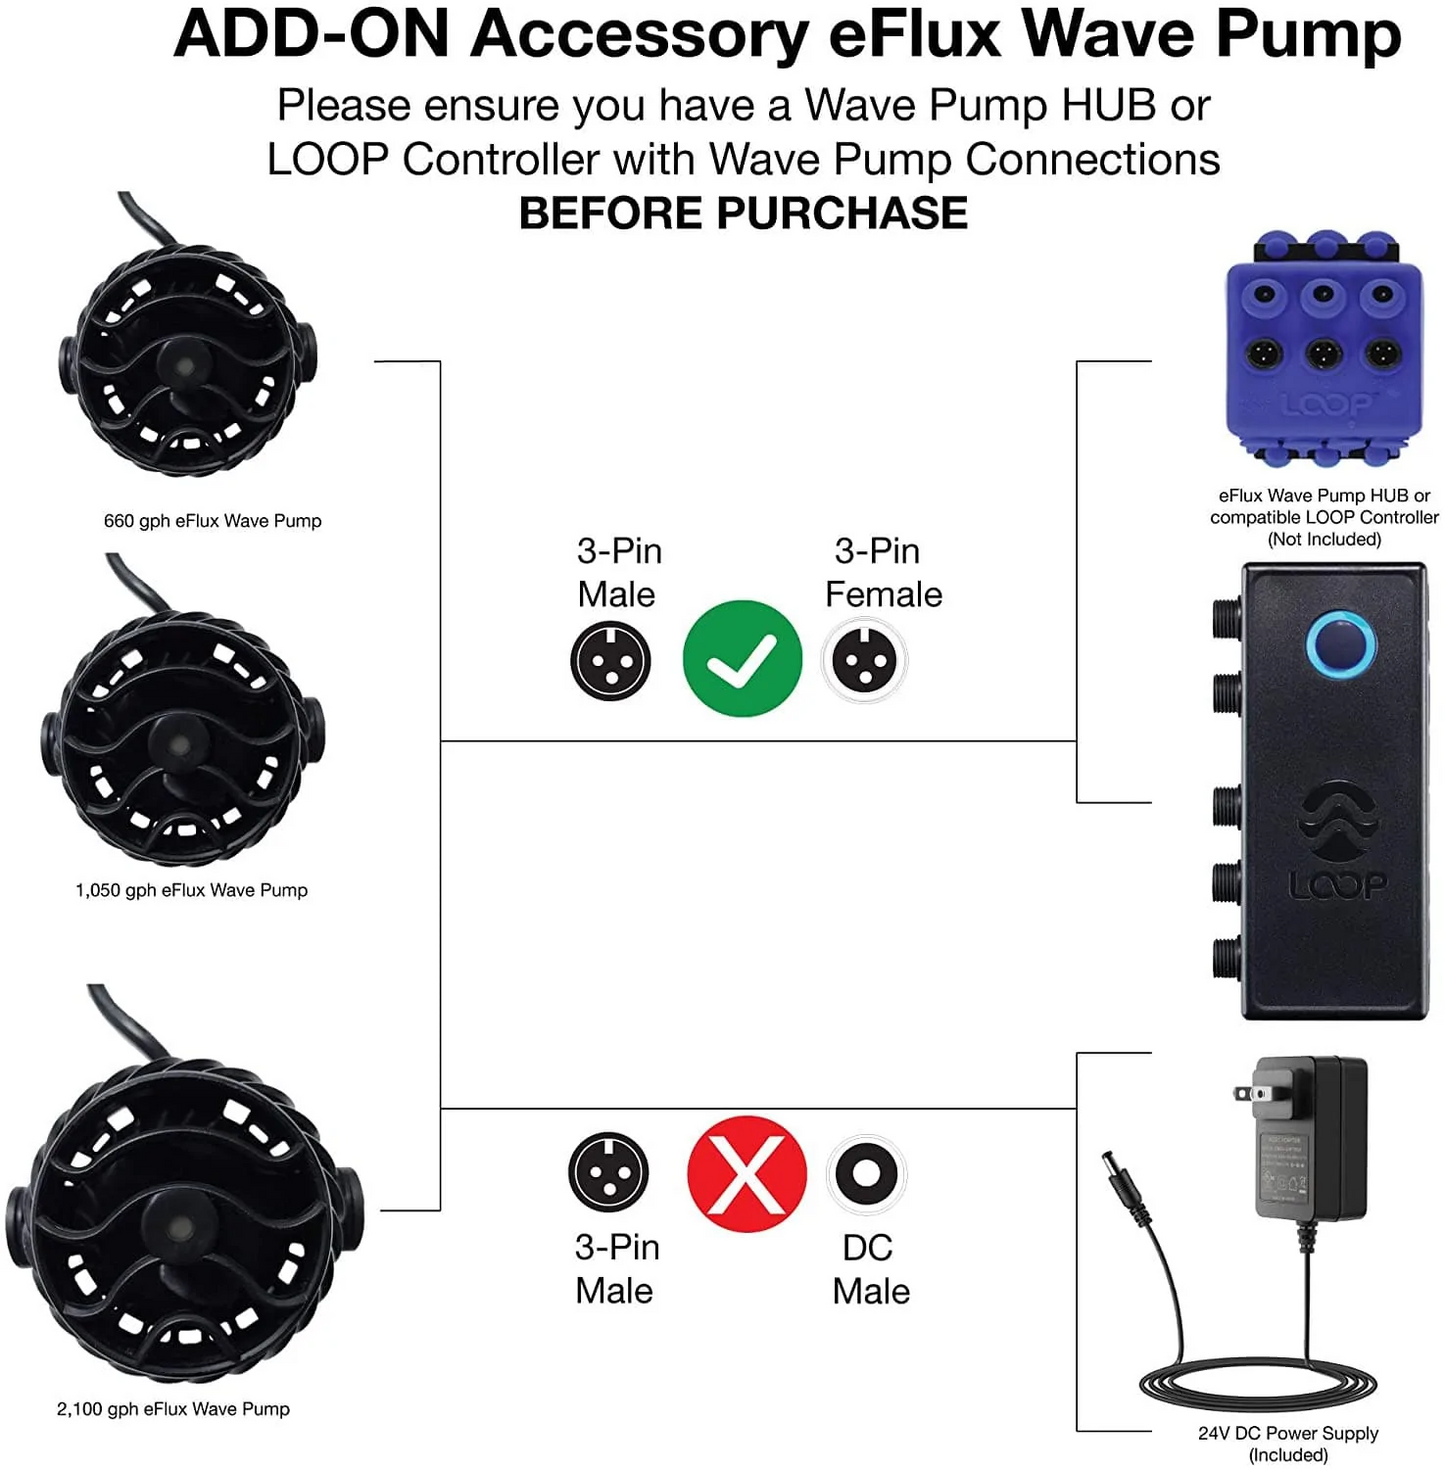 Current eFlux Wave Pump 1050 Accessory Wave Pump Part#6005